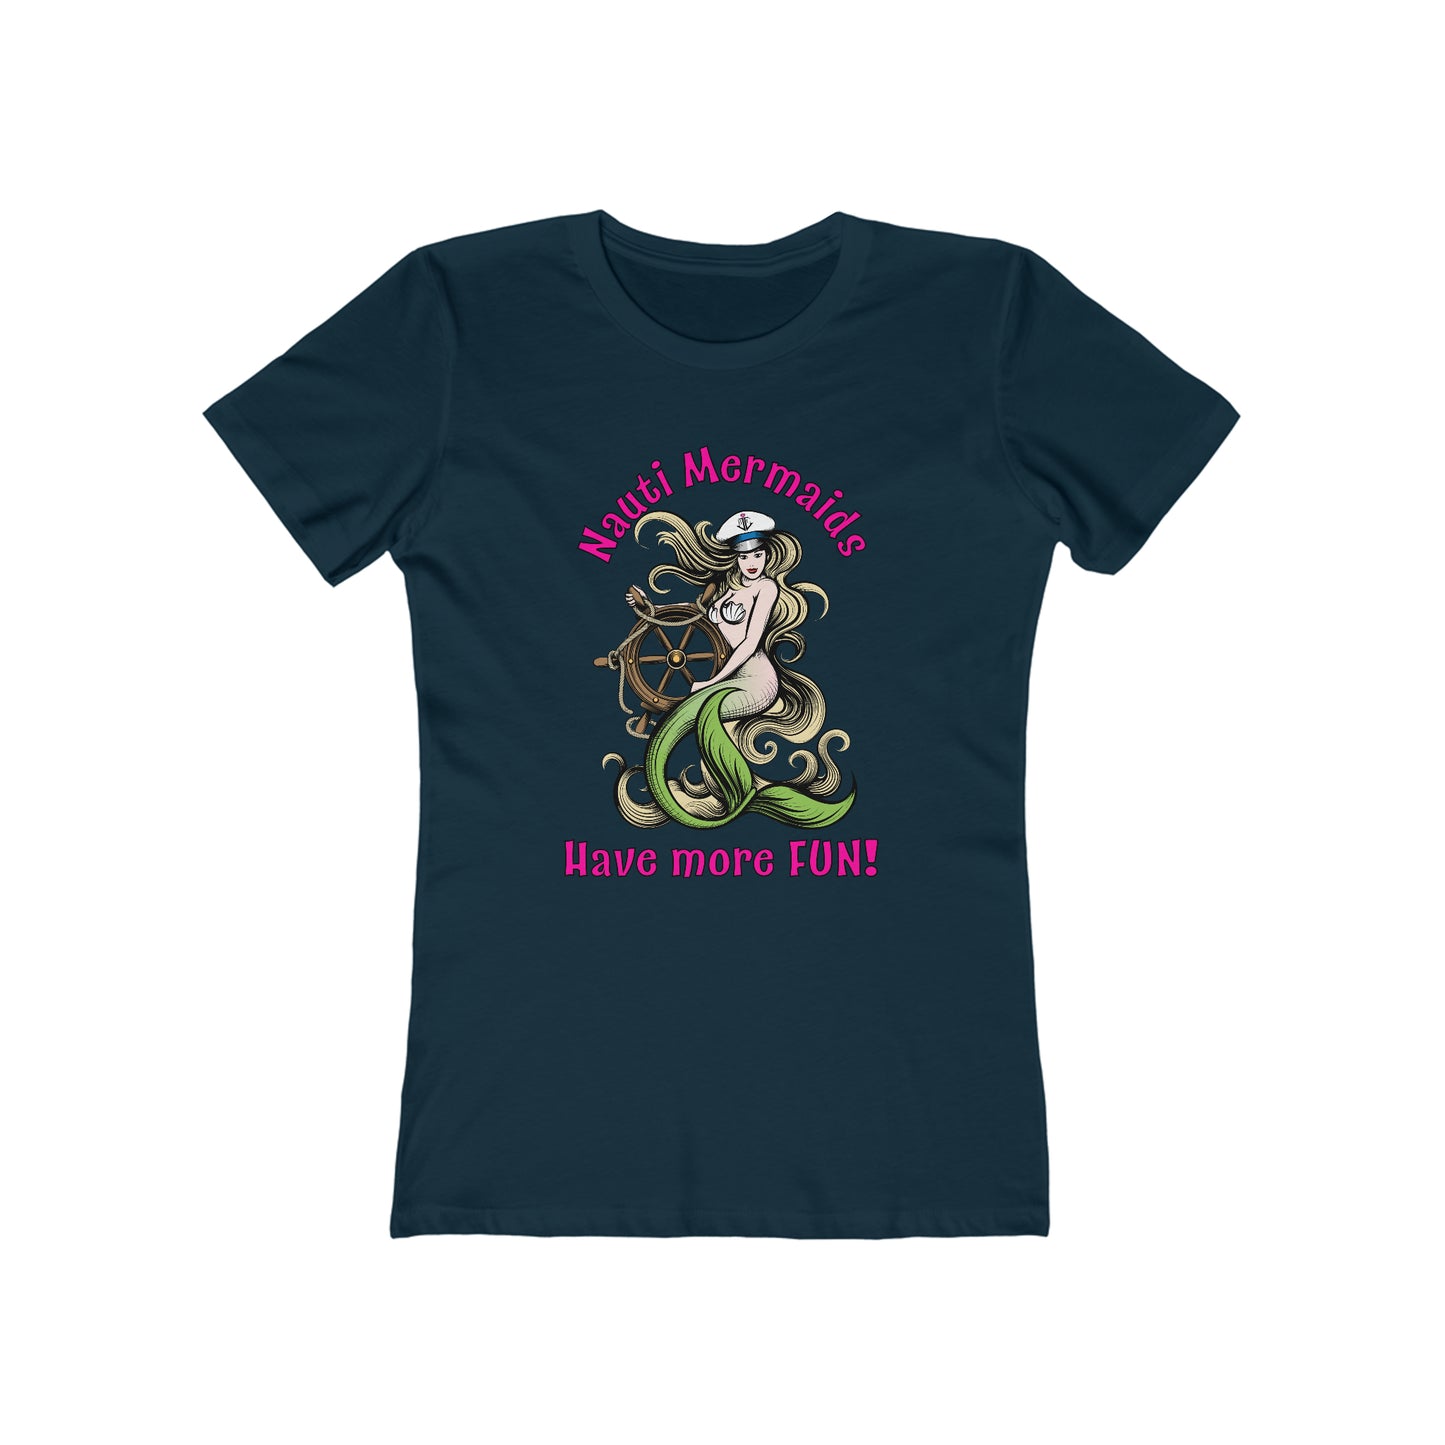 Nauti Mermaids Have More FUN!, Pink on Blond Hair–Women's The Boyfriend Tee